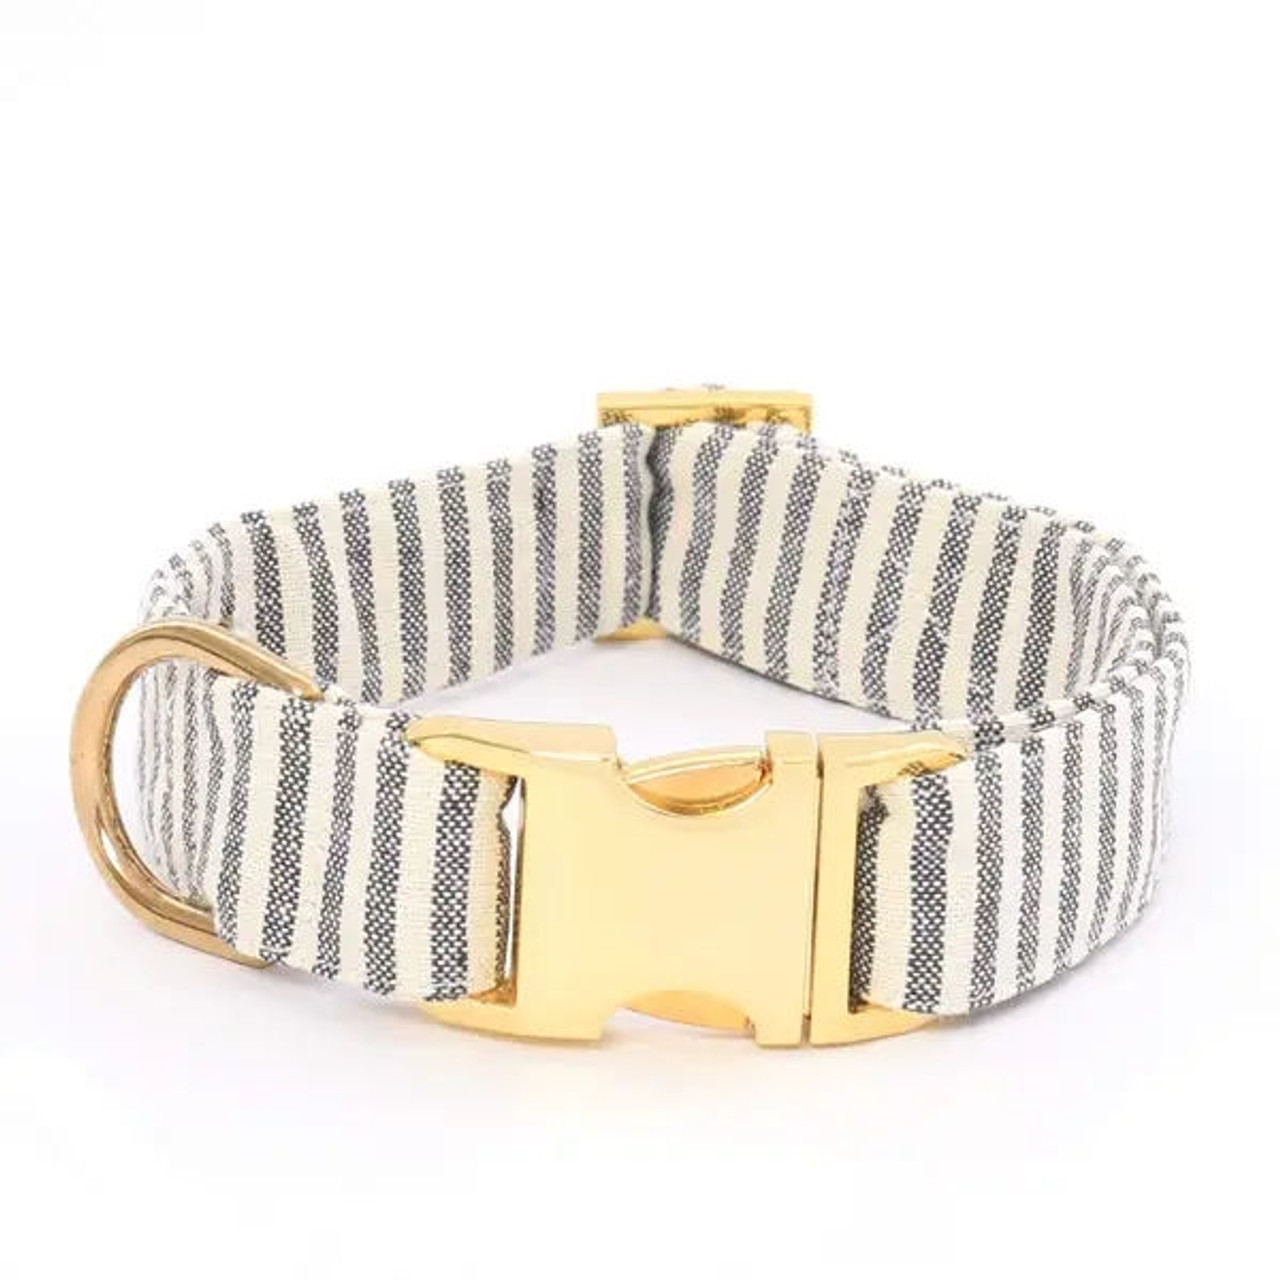 Stylish Dog Collar - Charcoal Stripe - XS - 8-12